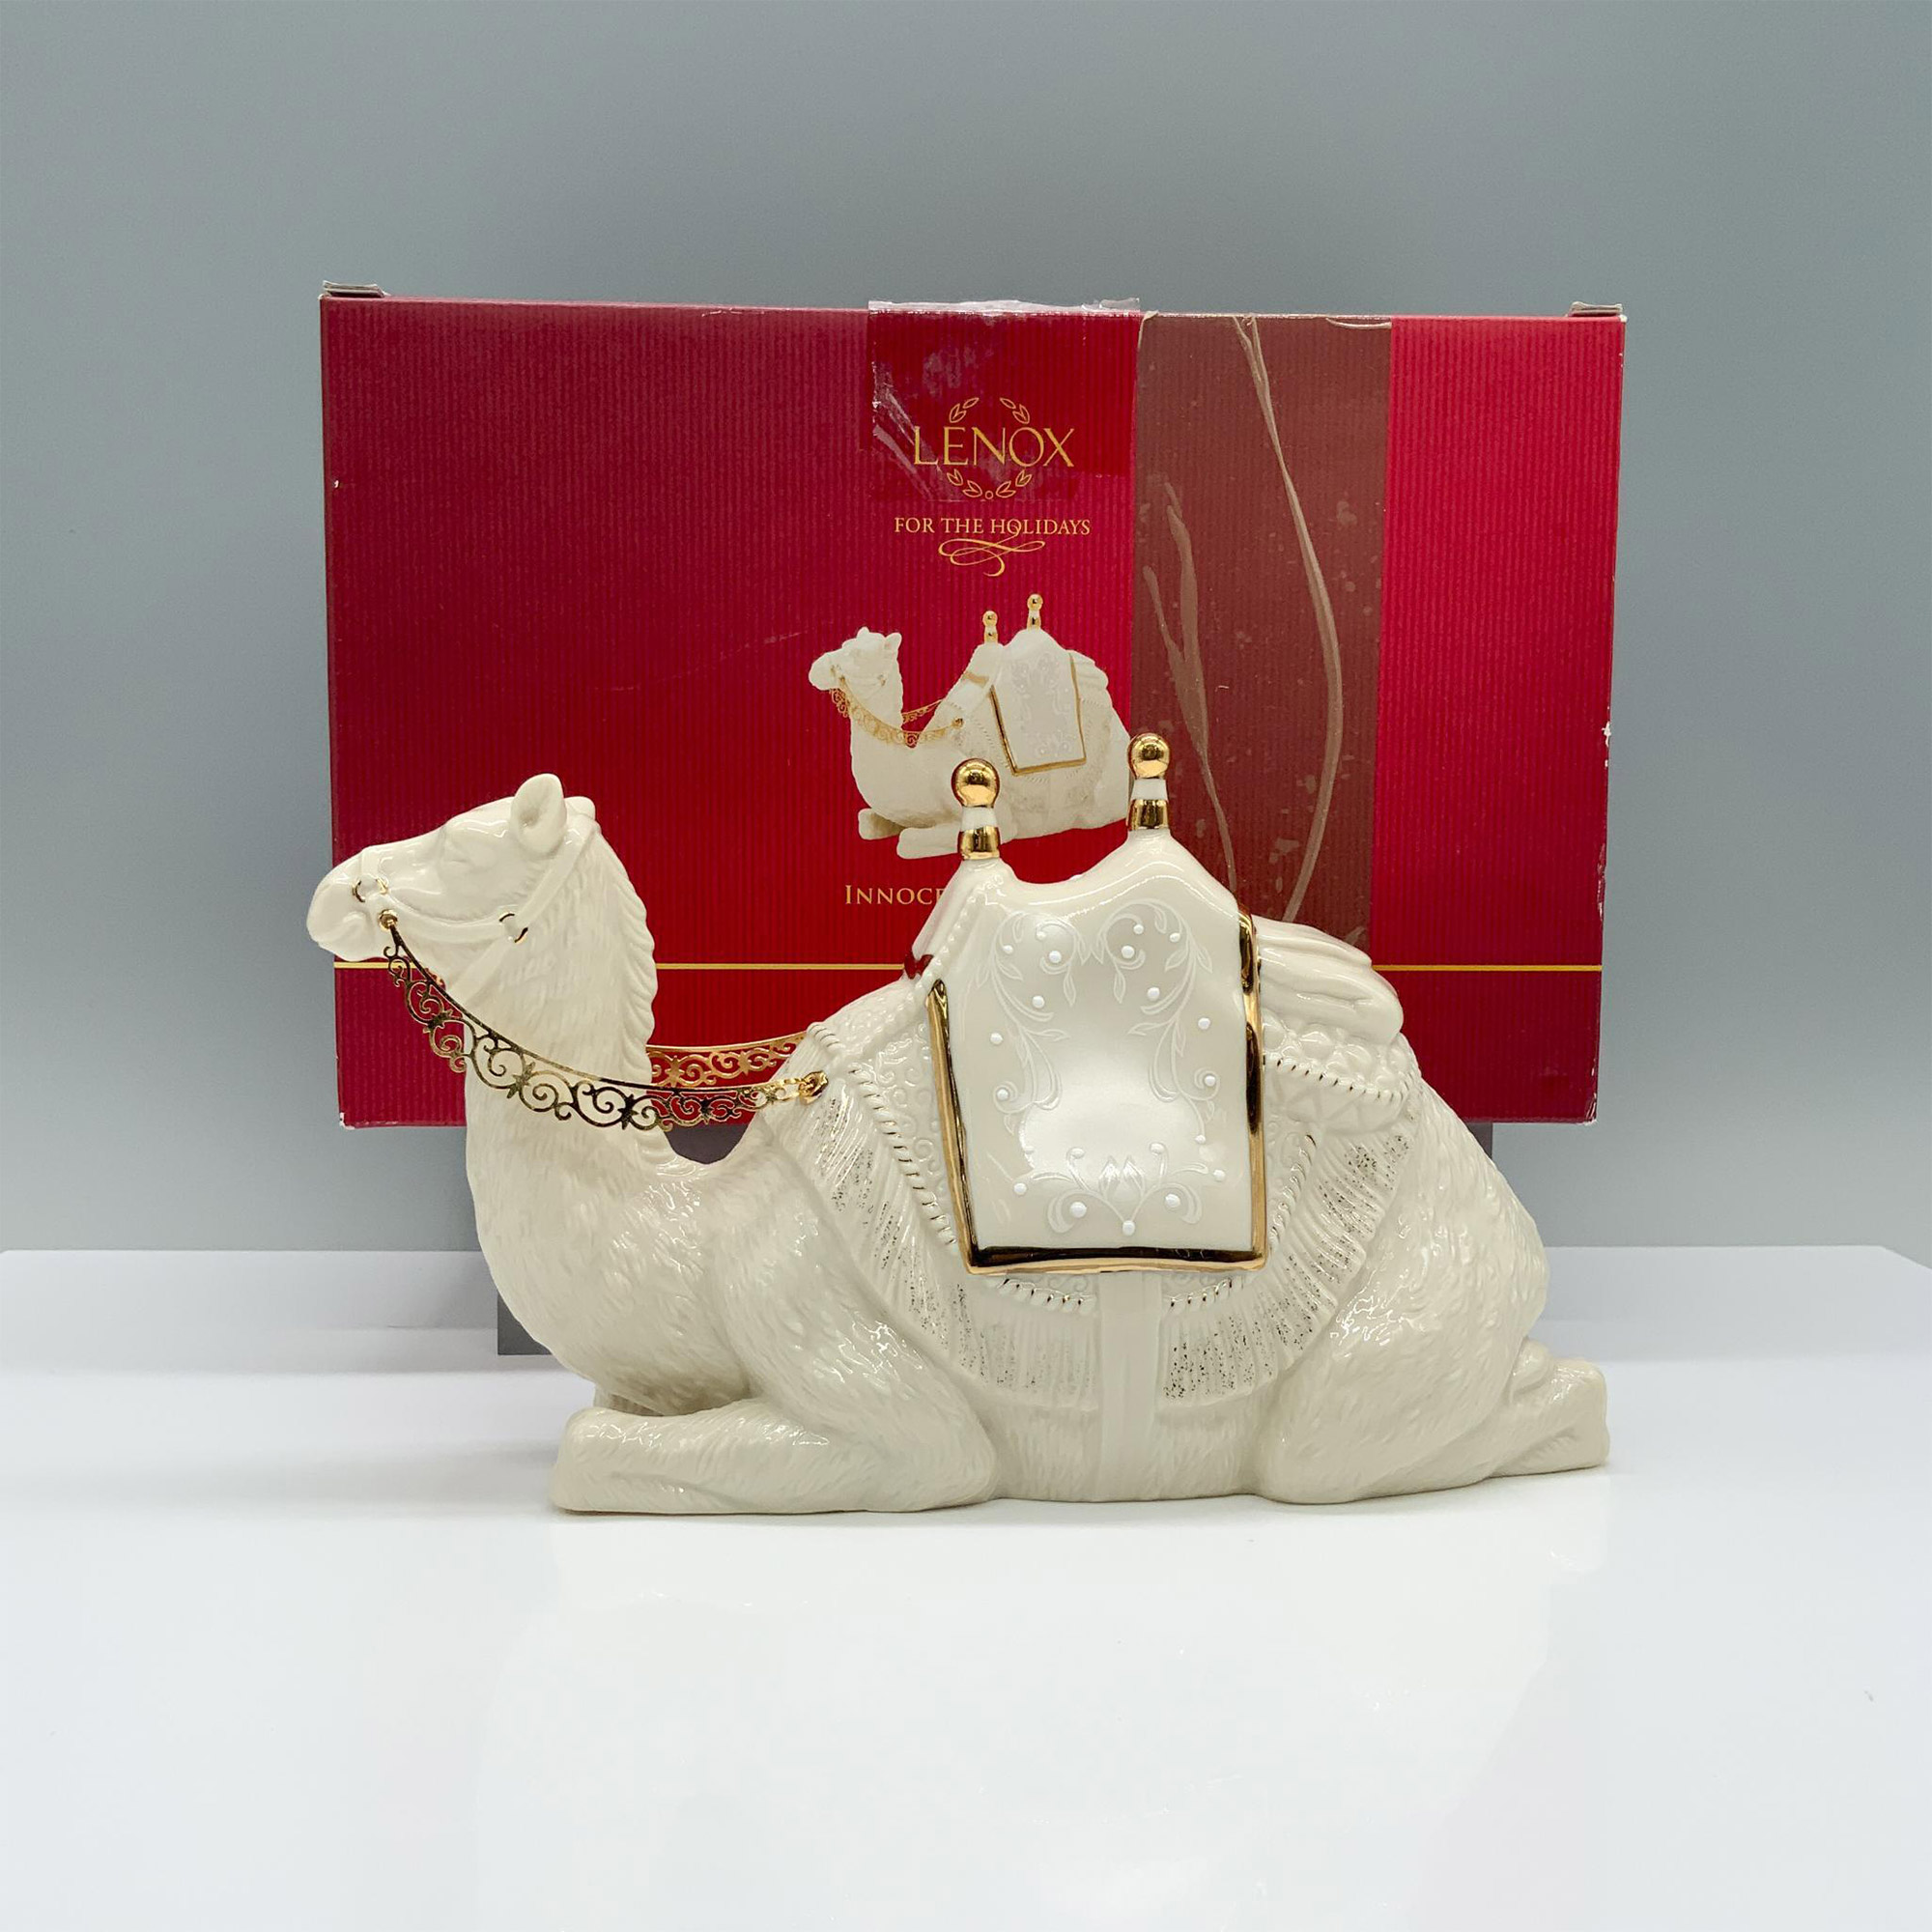 Lenox Porcelain Figurine, Innocence Nativity Camel - Image 4 of 4